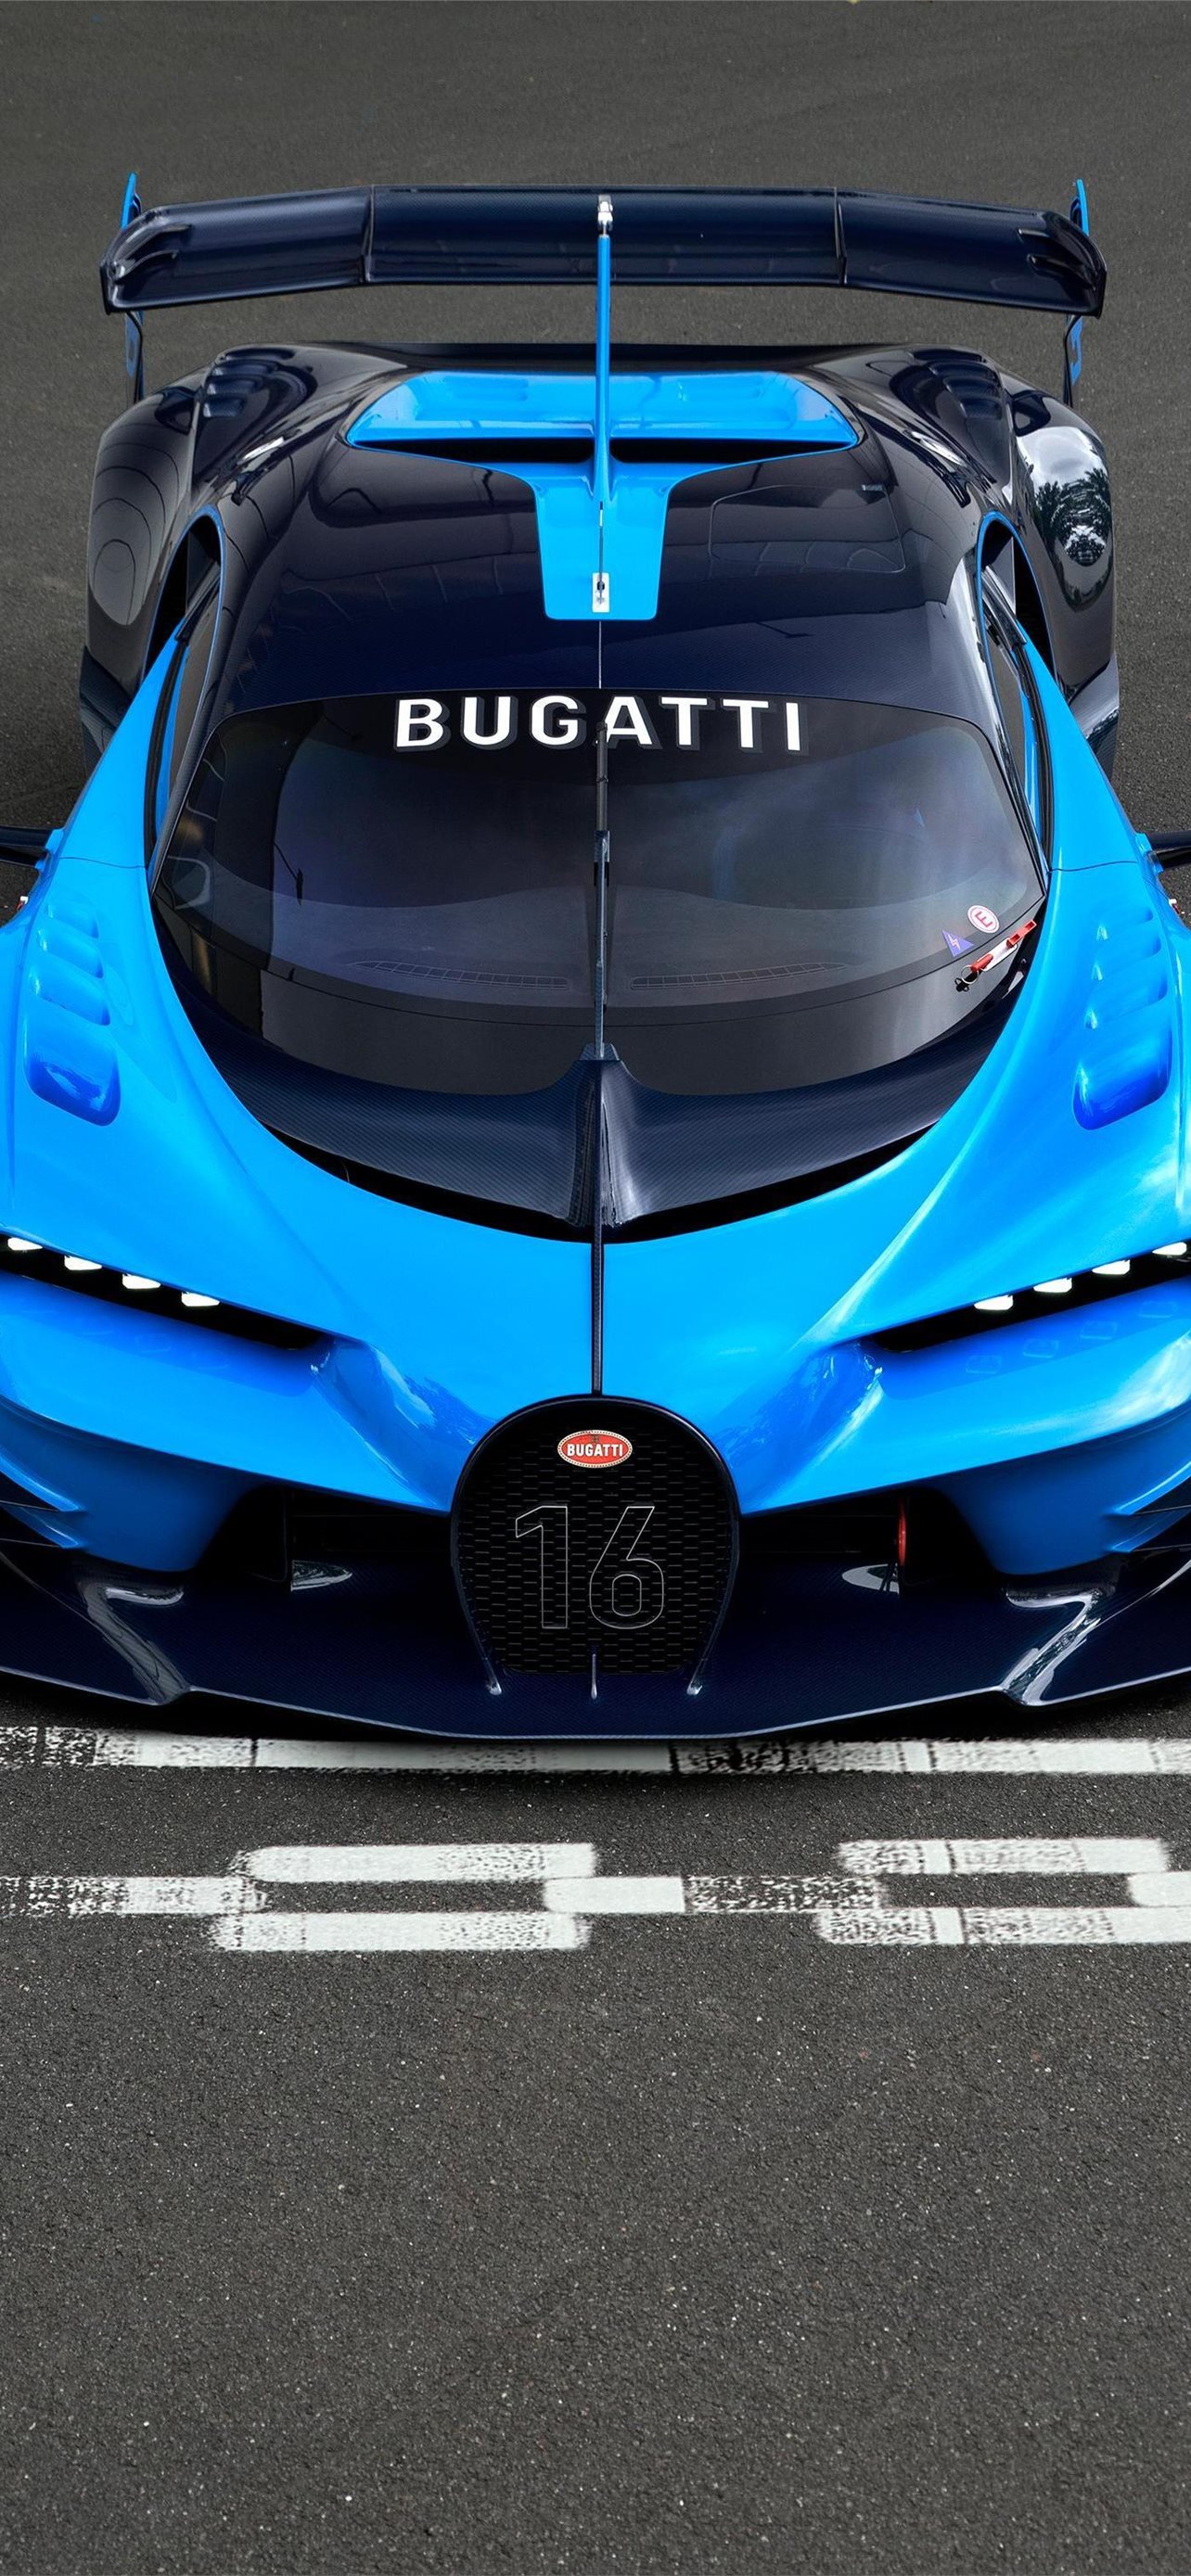 Bugatti chiron top free bugatti chiron access iphone wallpapers free download